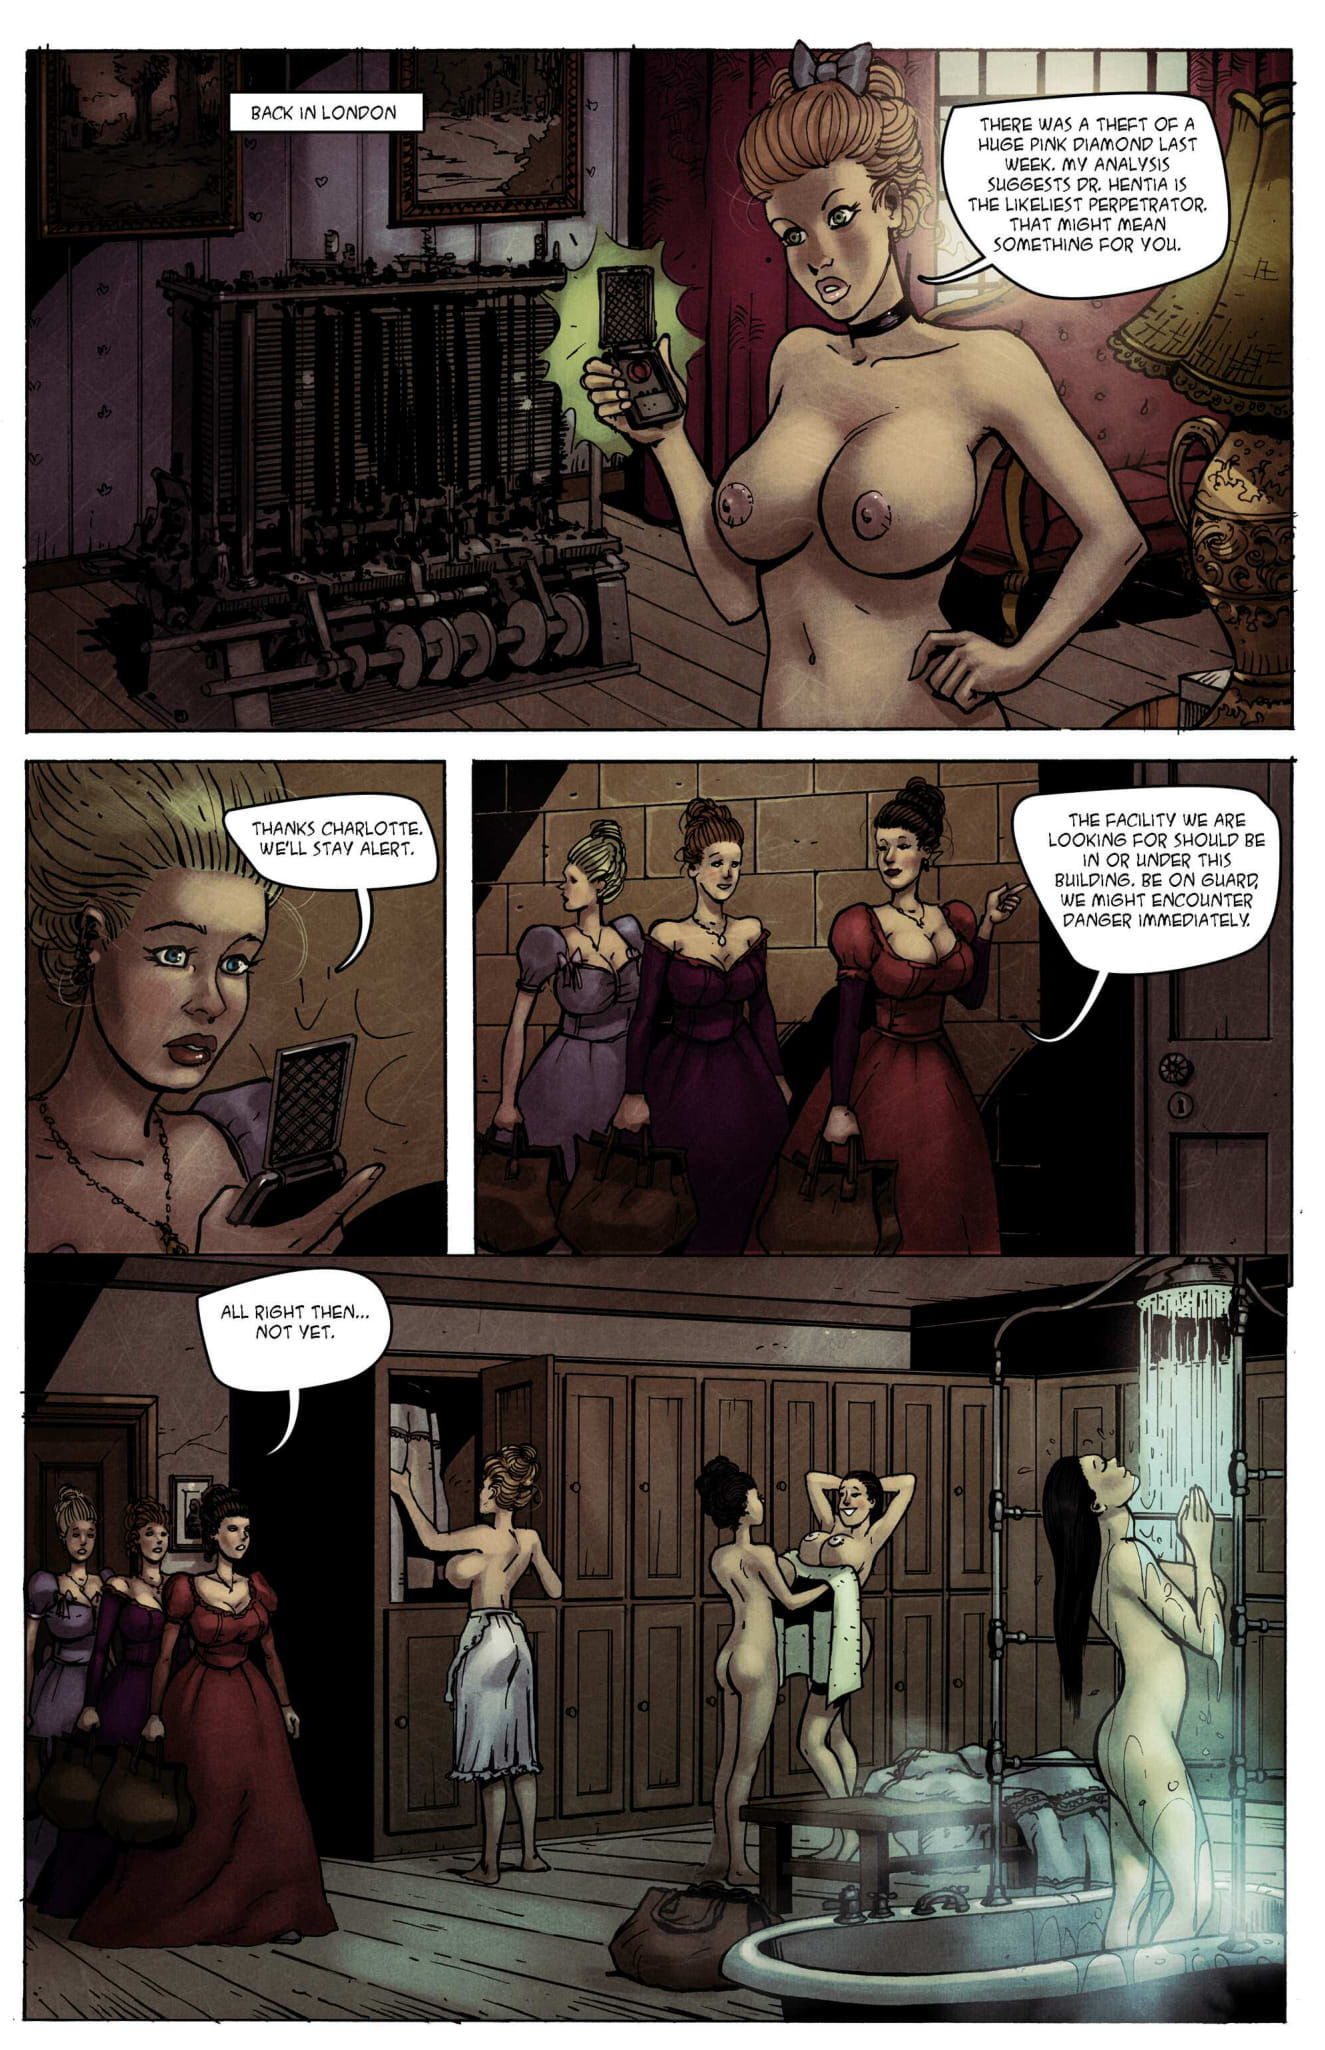 Artemis Club The Bountiful Gardens Affair (BotComics) page 12